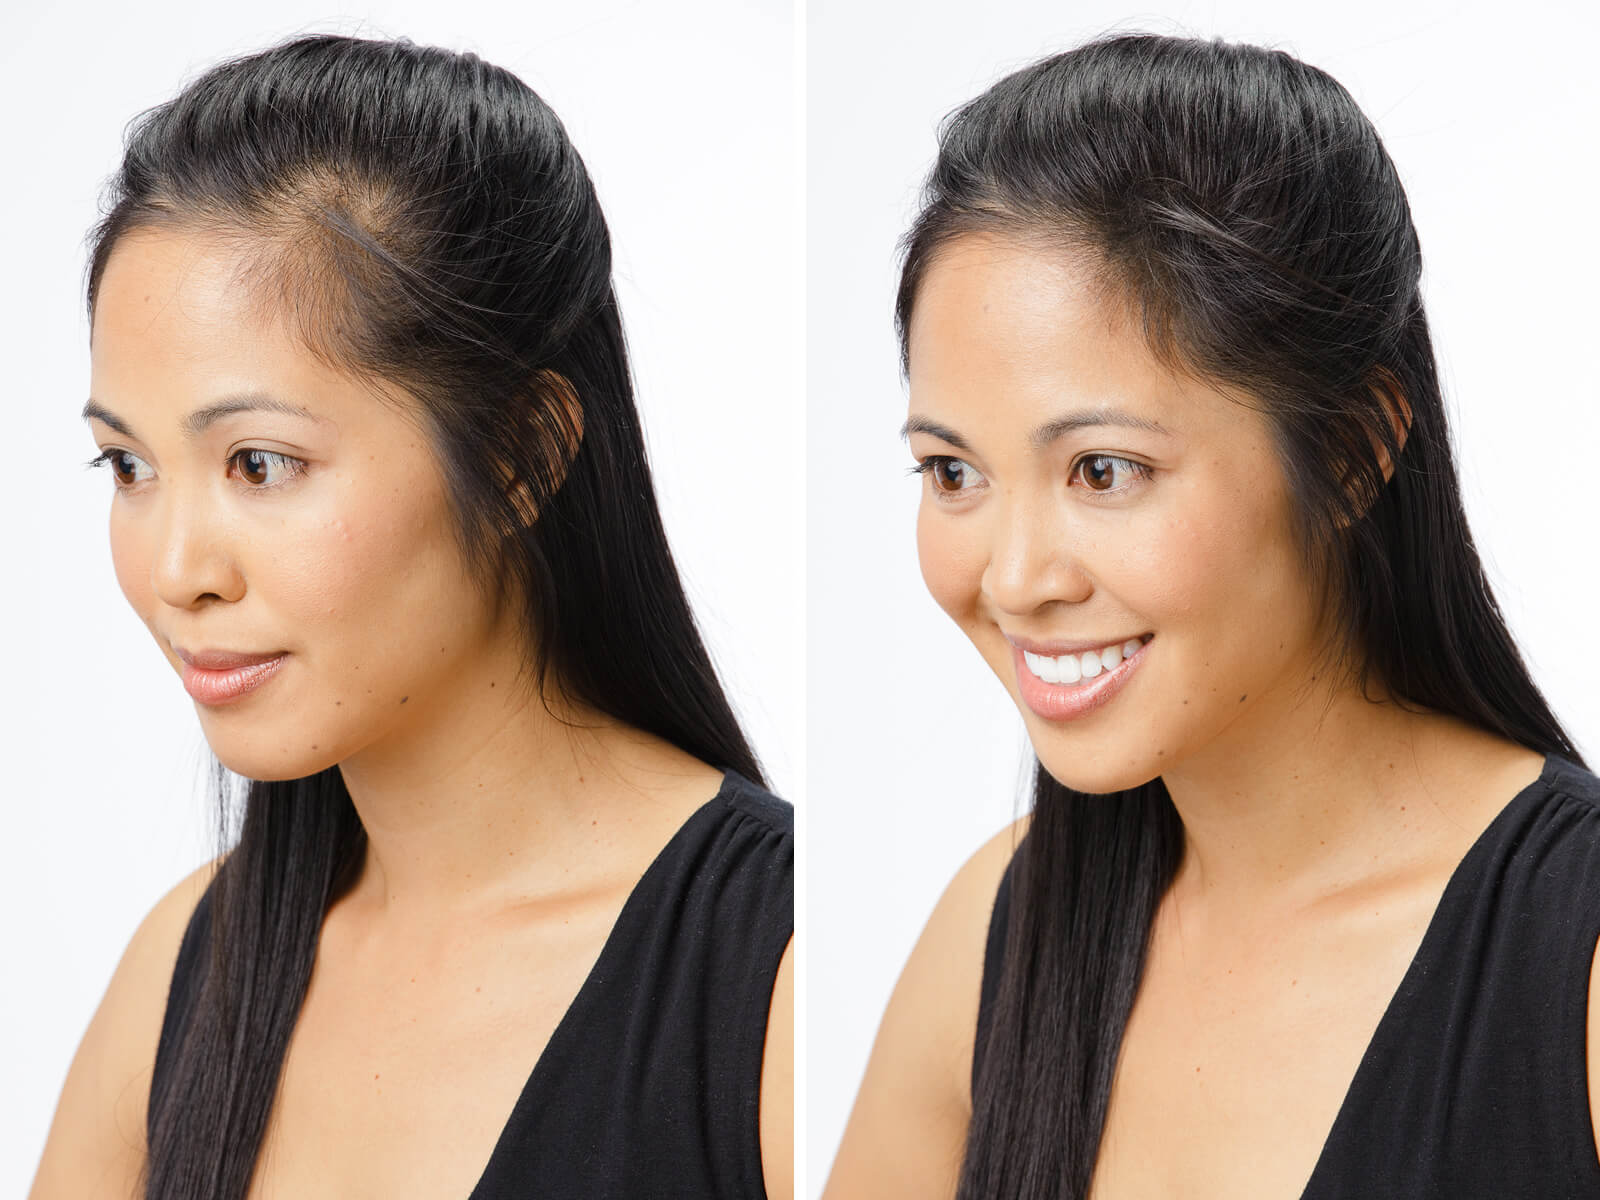 Types of Hair Loss in Women